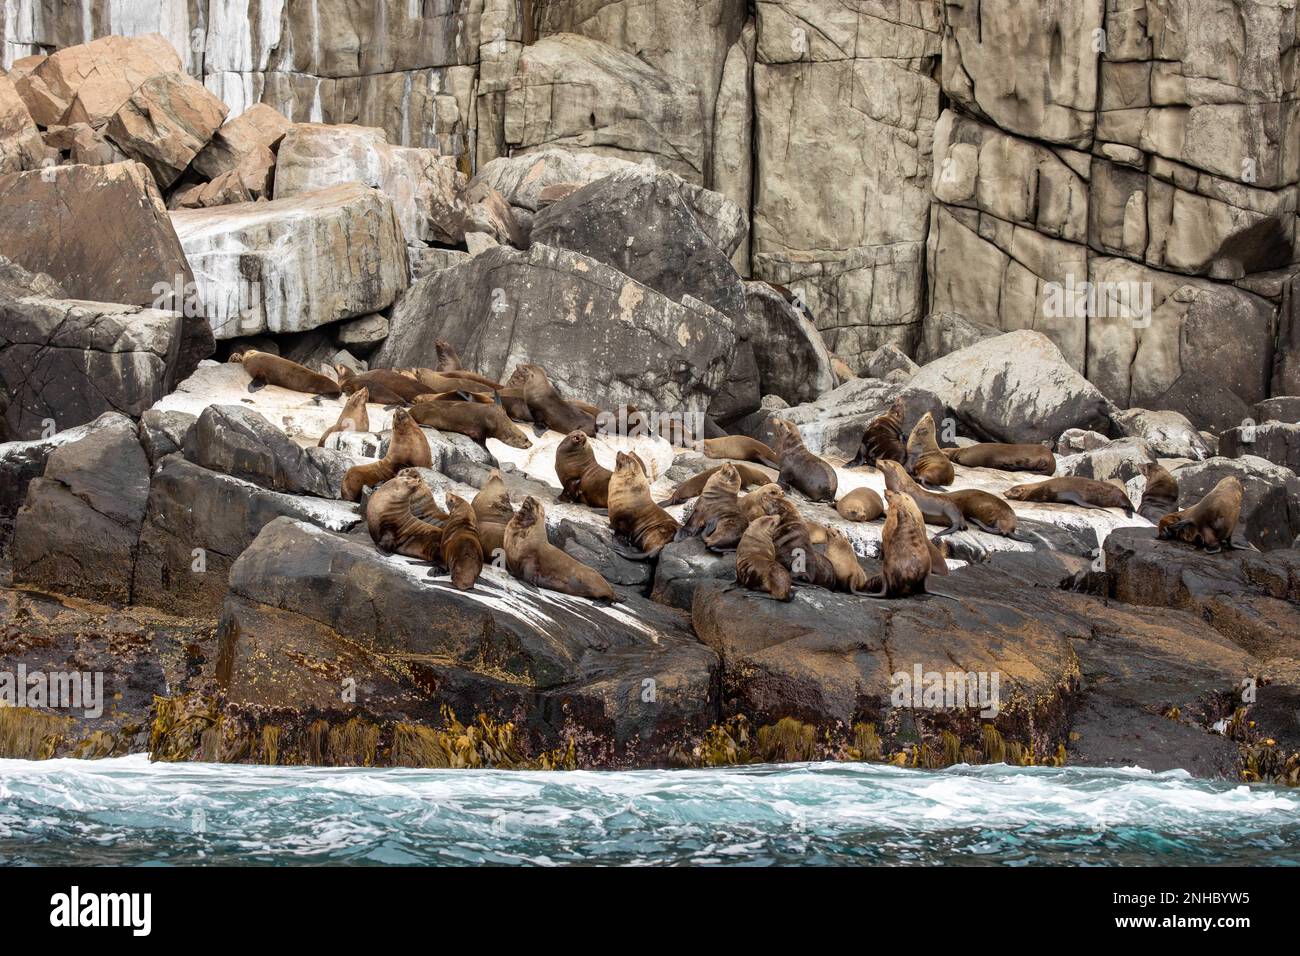 Haul out of brown fur seals on rocky coastline of Tasmania, Australia in the Tasman National Park. Stock Photo